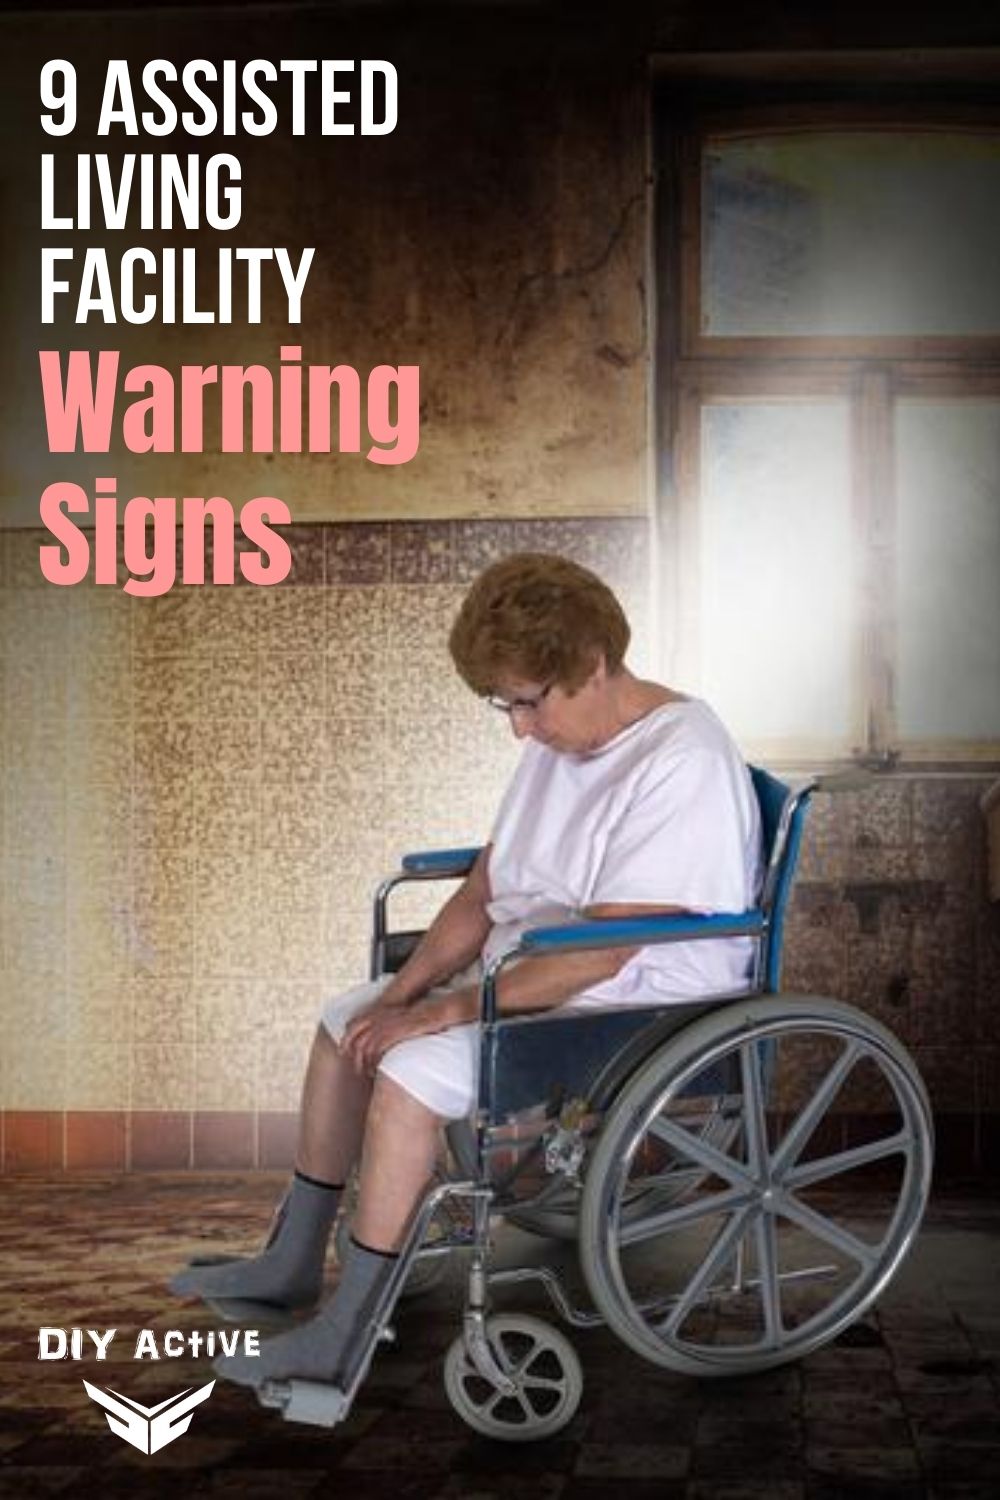 9 Assisted Living Facility Warning Signs